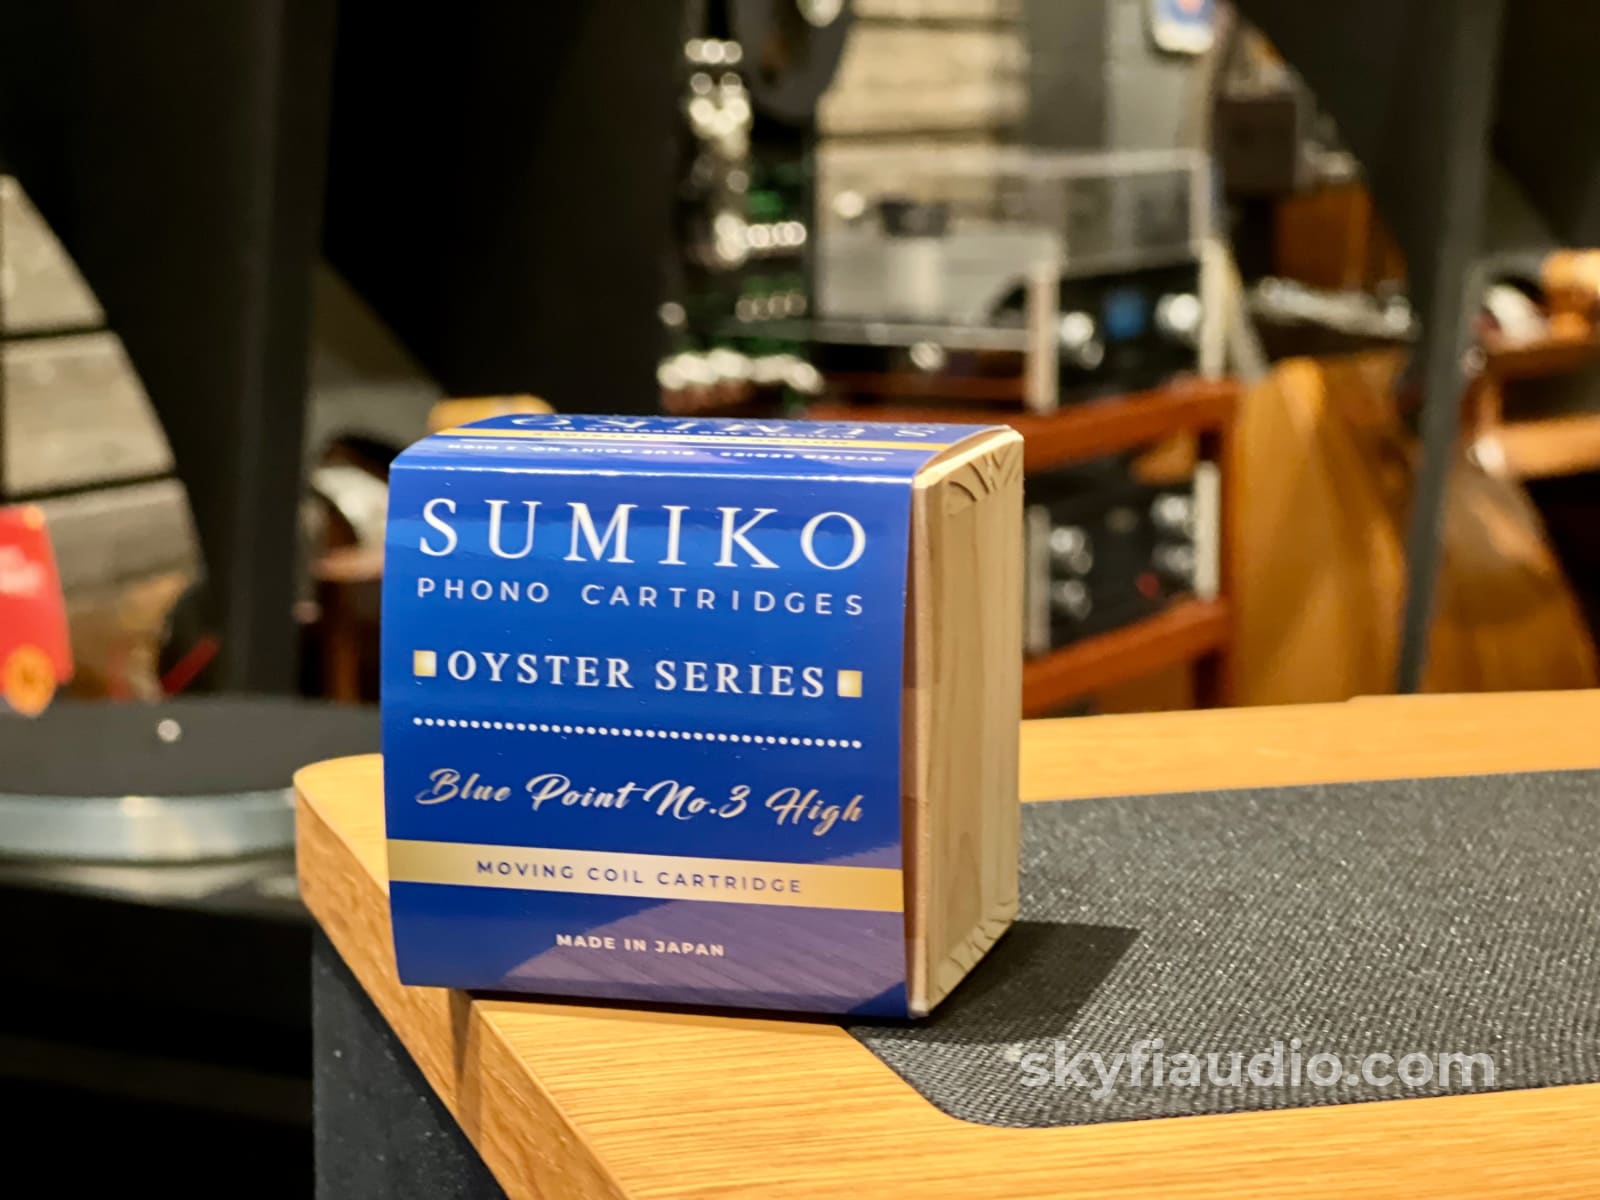 Sumiko Blue Point No. 3 High Phono Cartridge New